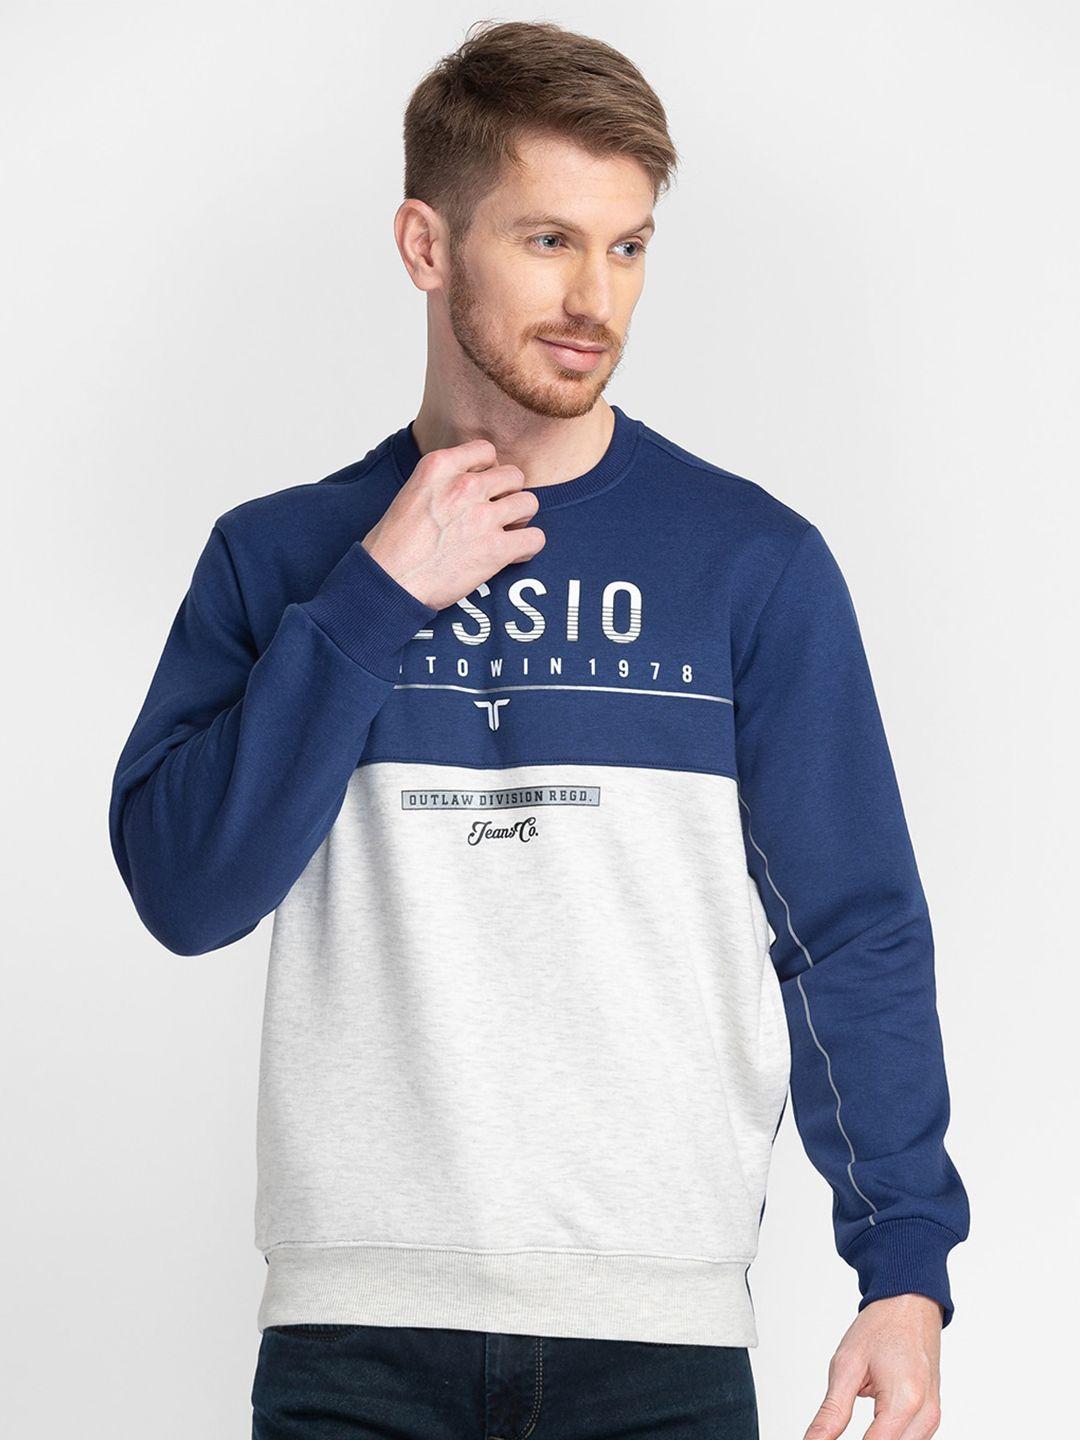 tessio men cream-coloured colourblocked sweatshirt